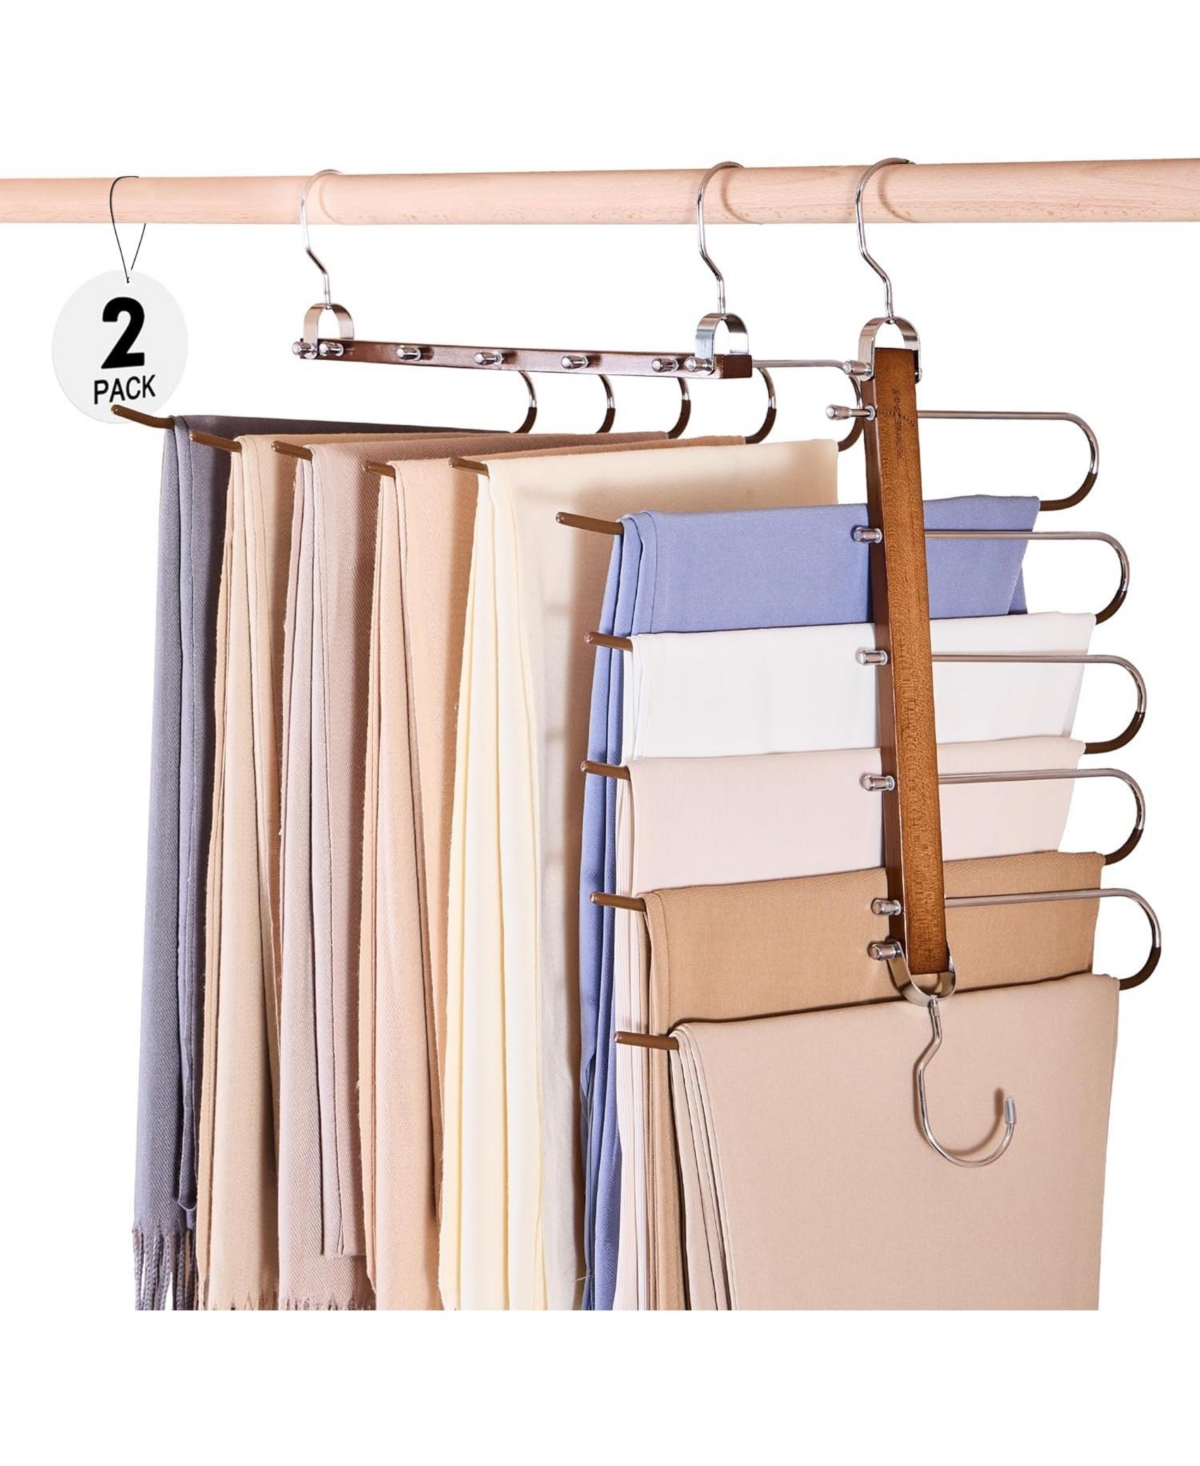 Pants Hangers Space Saving, Wood Jean Hangers for Closet 2 pack - Walnut